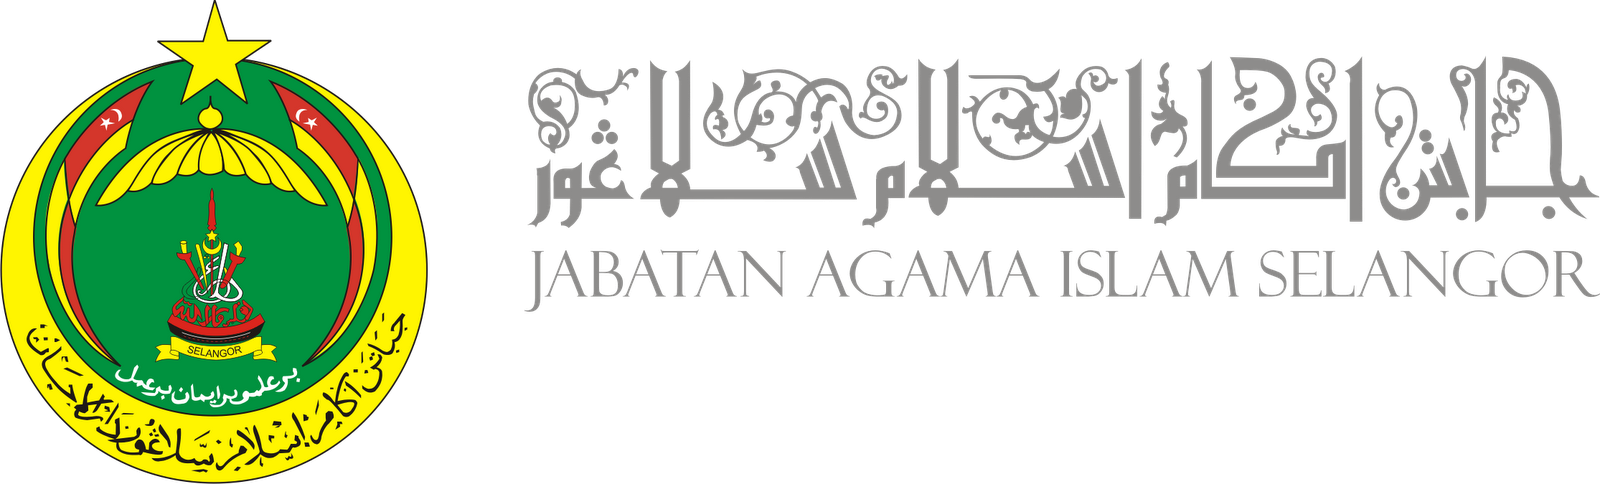 Jabatan Pendaftaran Malaysia Logo photo - 1